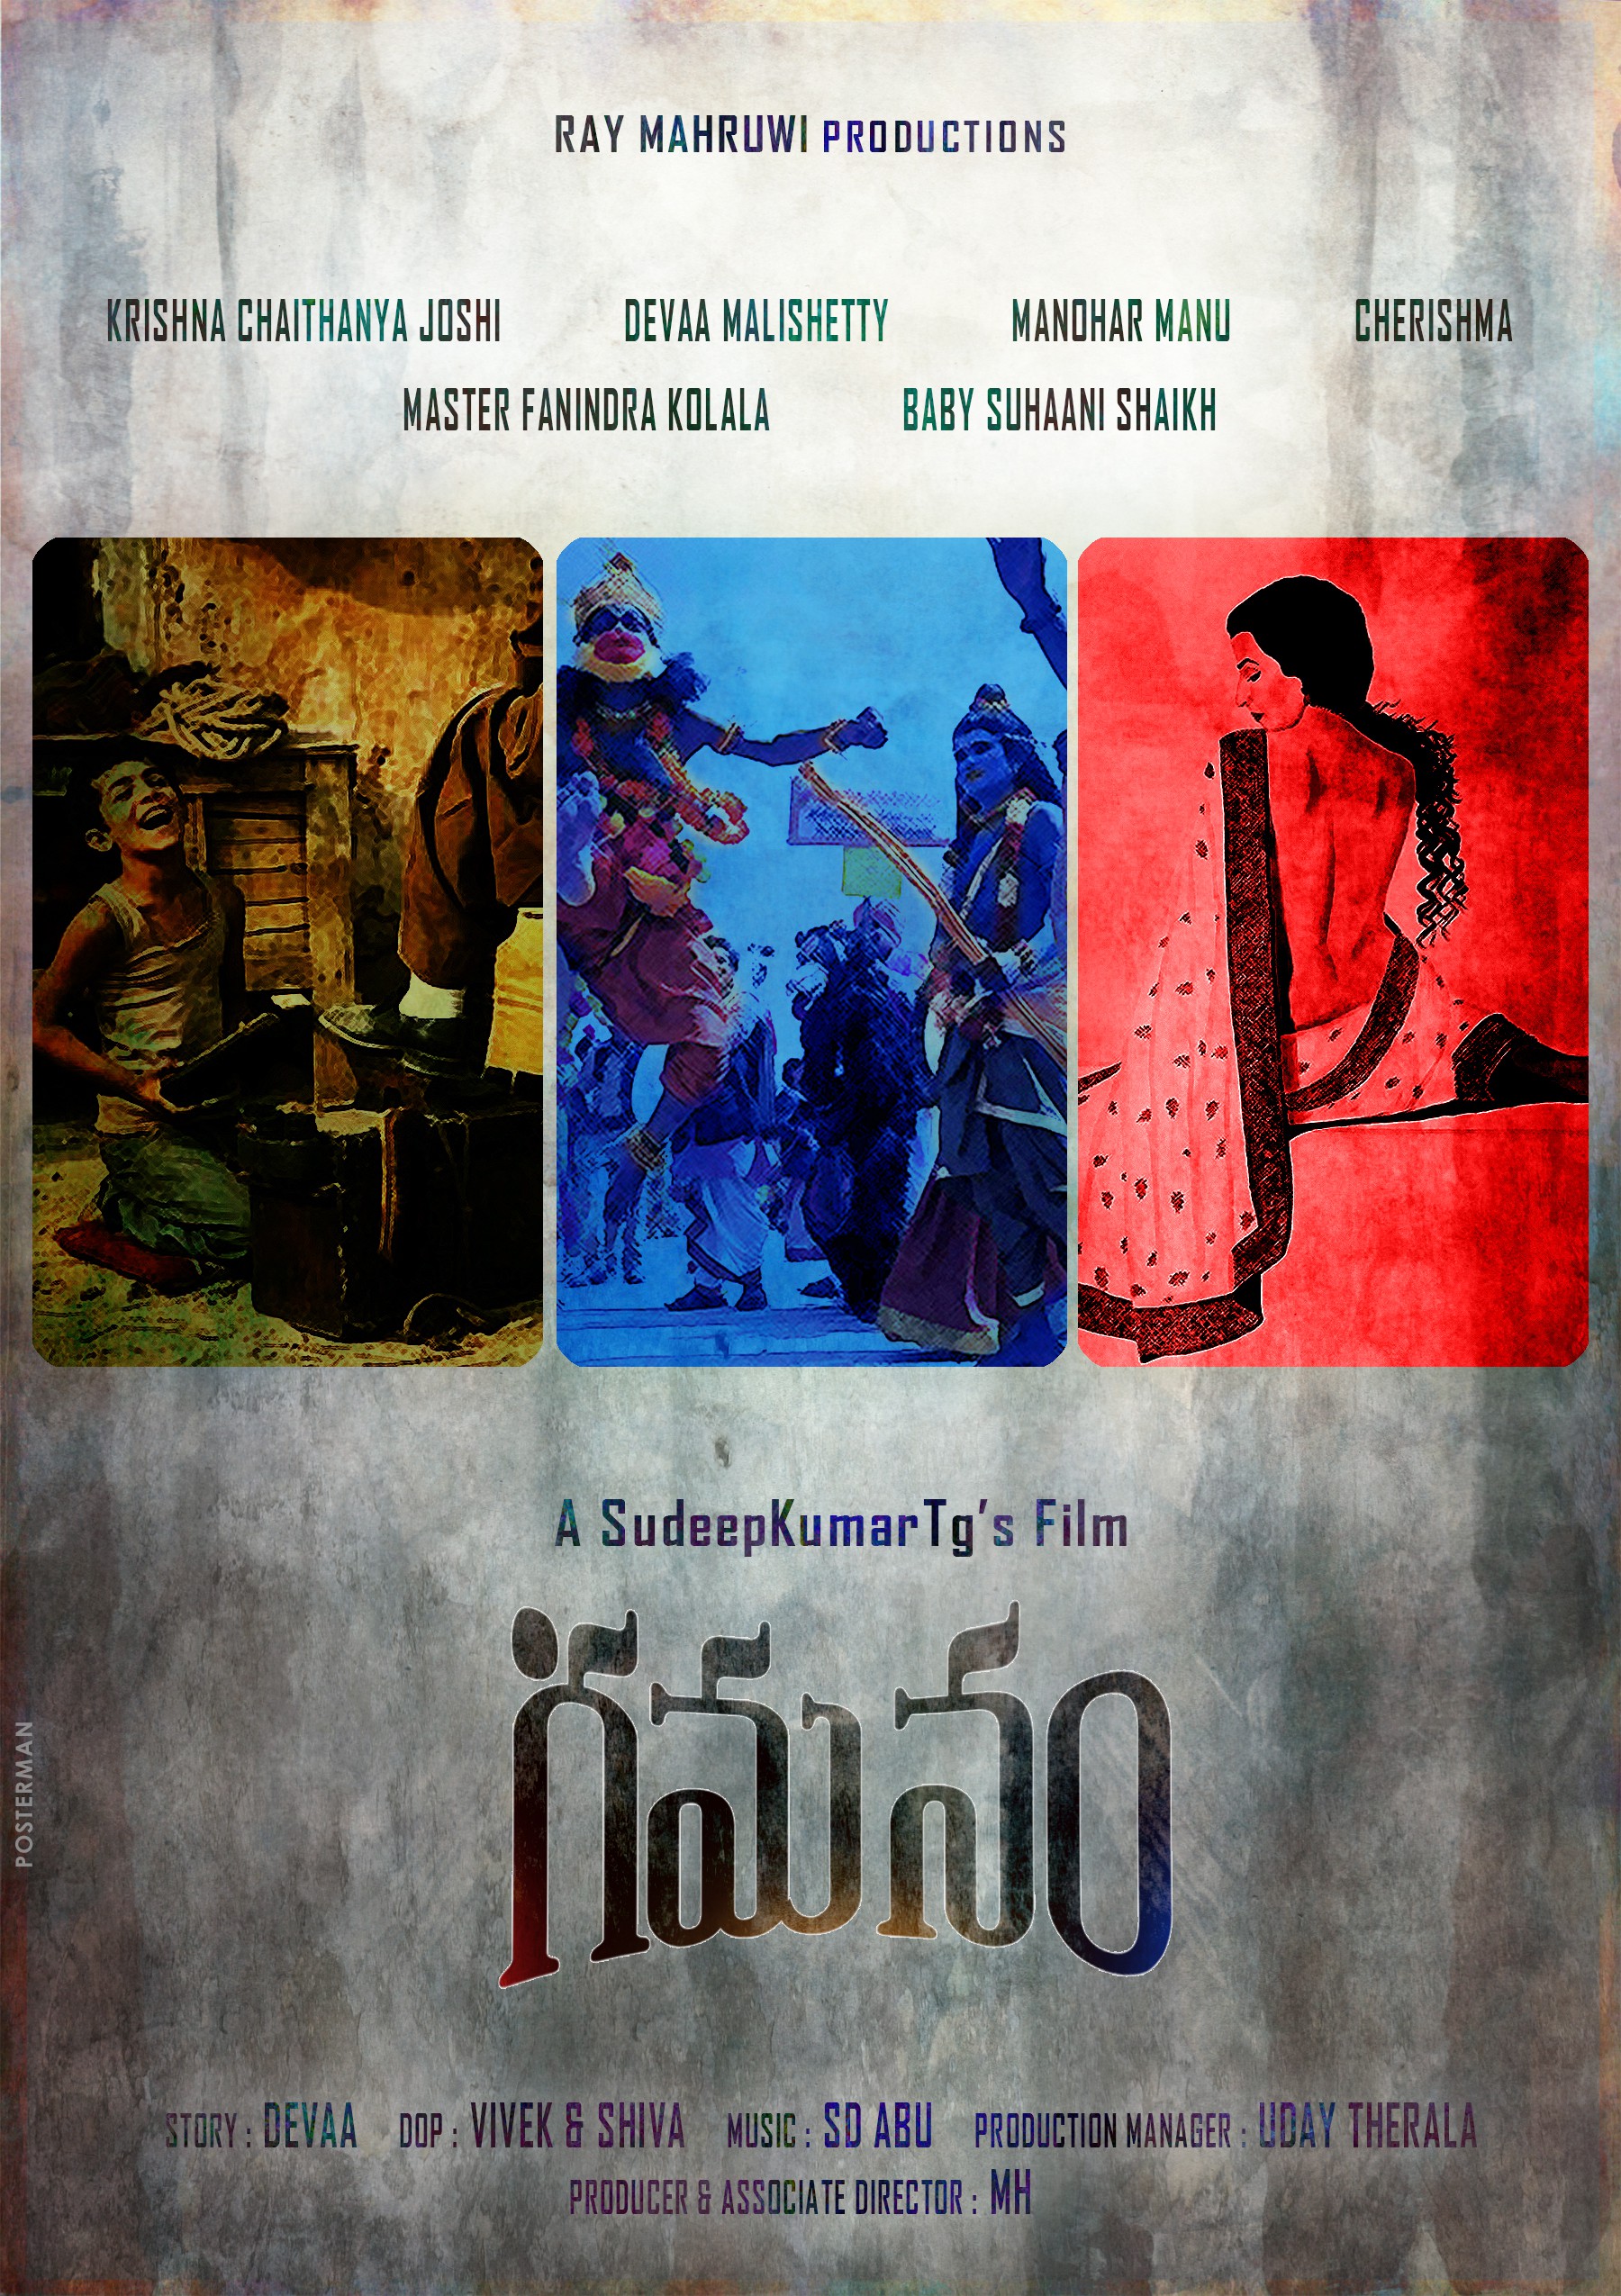 Mega Sized Movie Poster Image for Gamanam